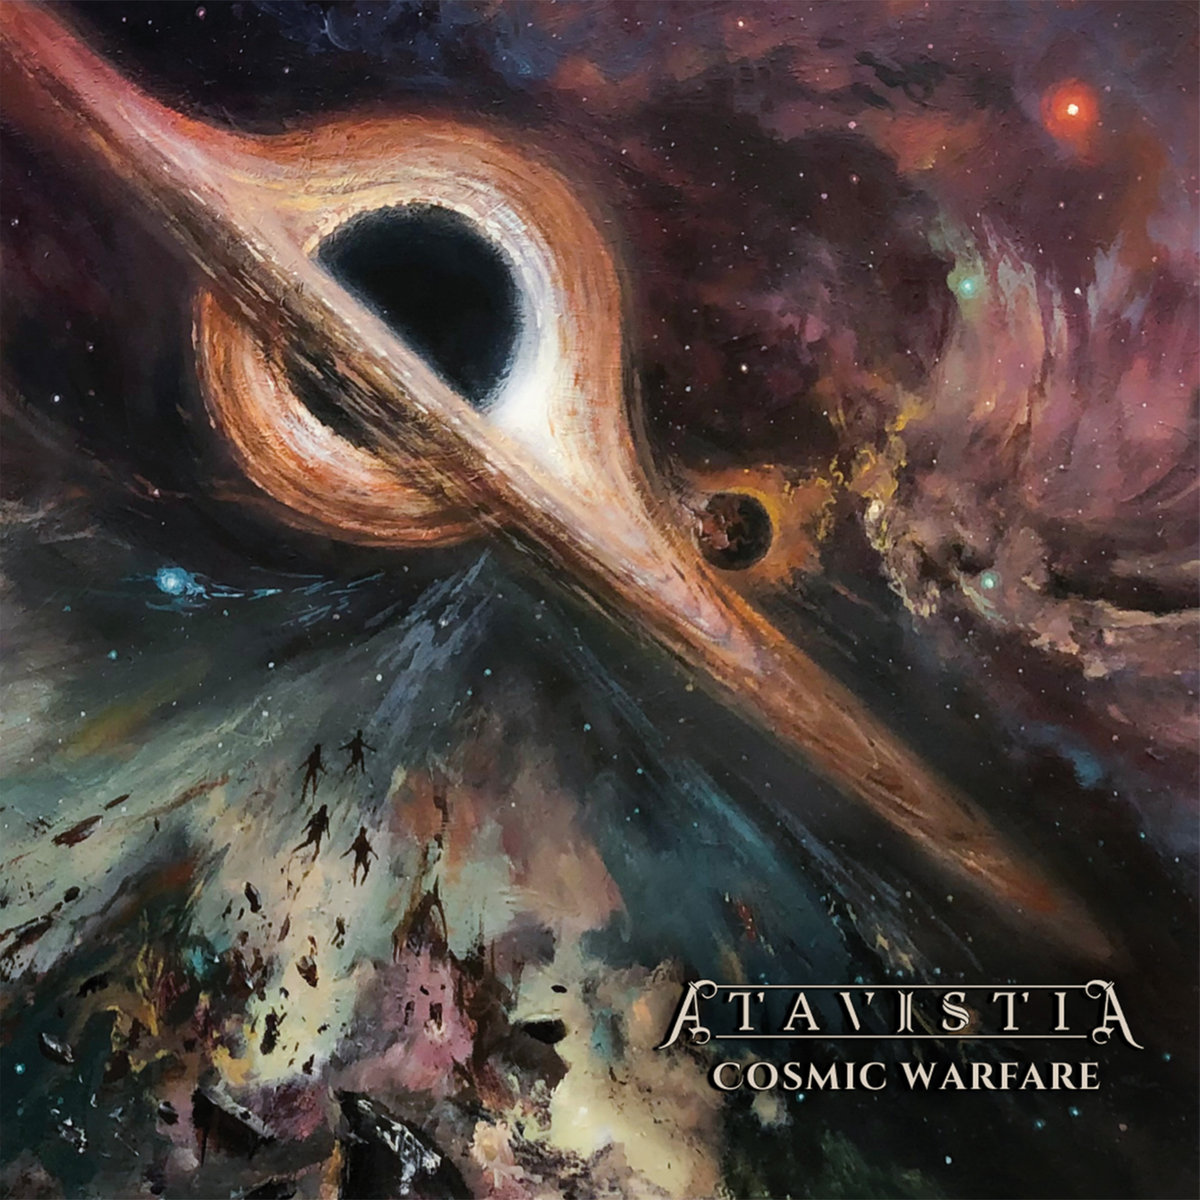 Atavistia — Cosmic Warfare cover artwork